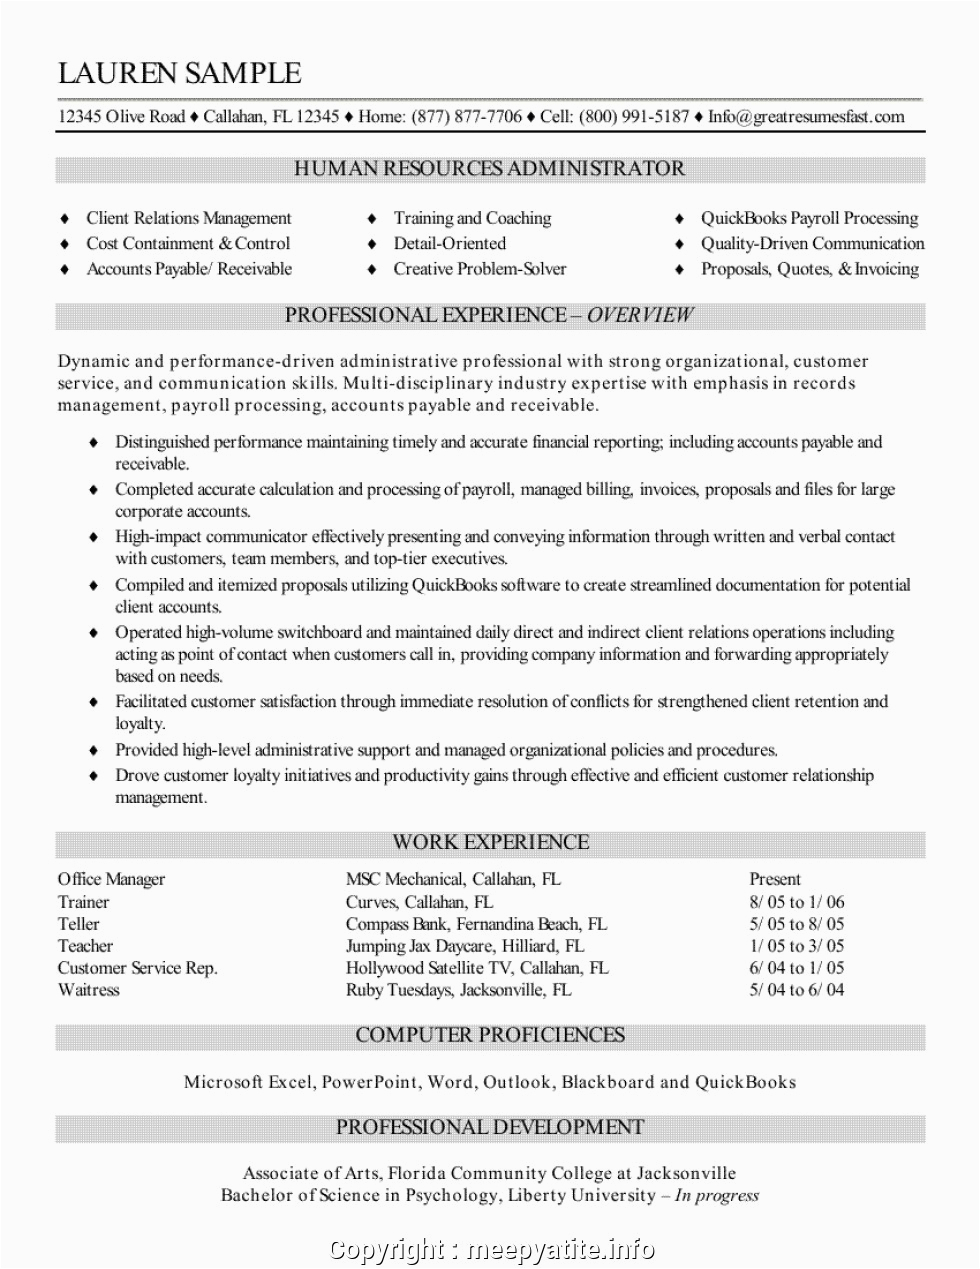 Sample Resume for Experienced Hr Recruiter Print Resume format for Experienced Hr Recruiter Great